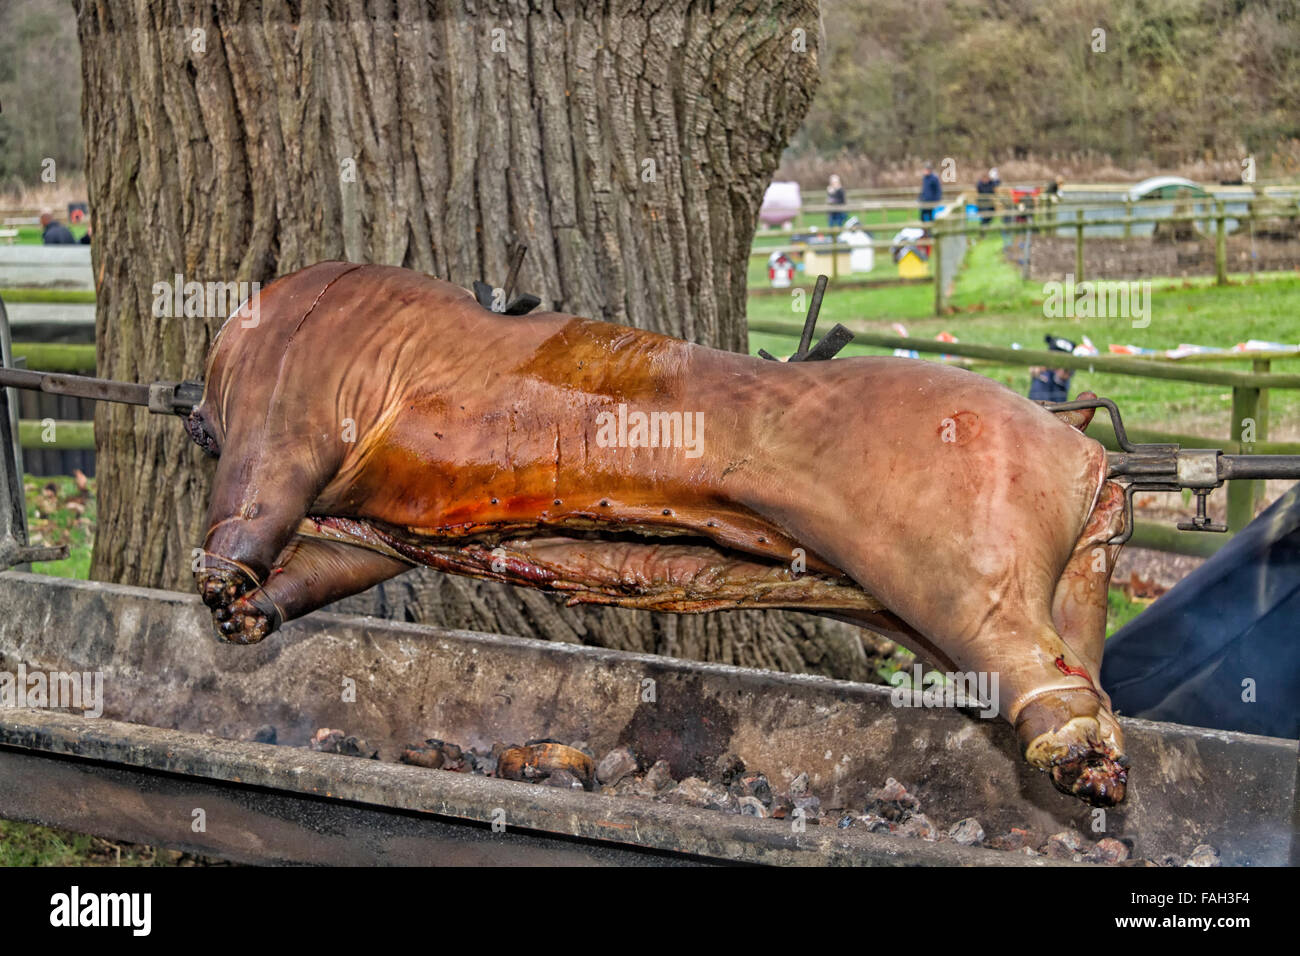 Rare breed pig roast, Christmas Market, Jimmy's Farm, Wherstead, Ipswich, Suffolk, UK, December 2015 Stock Photo